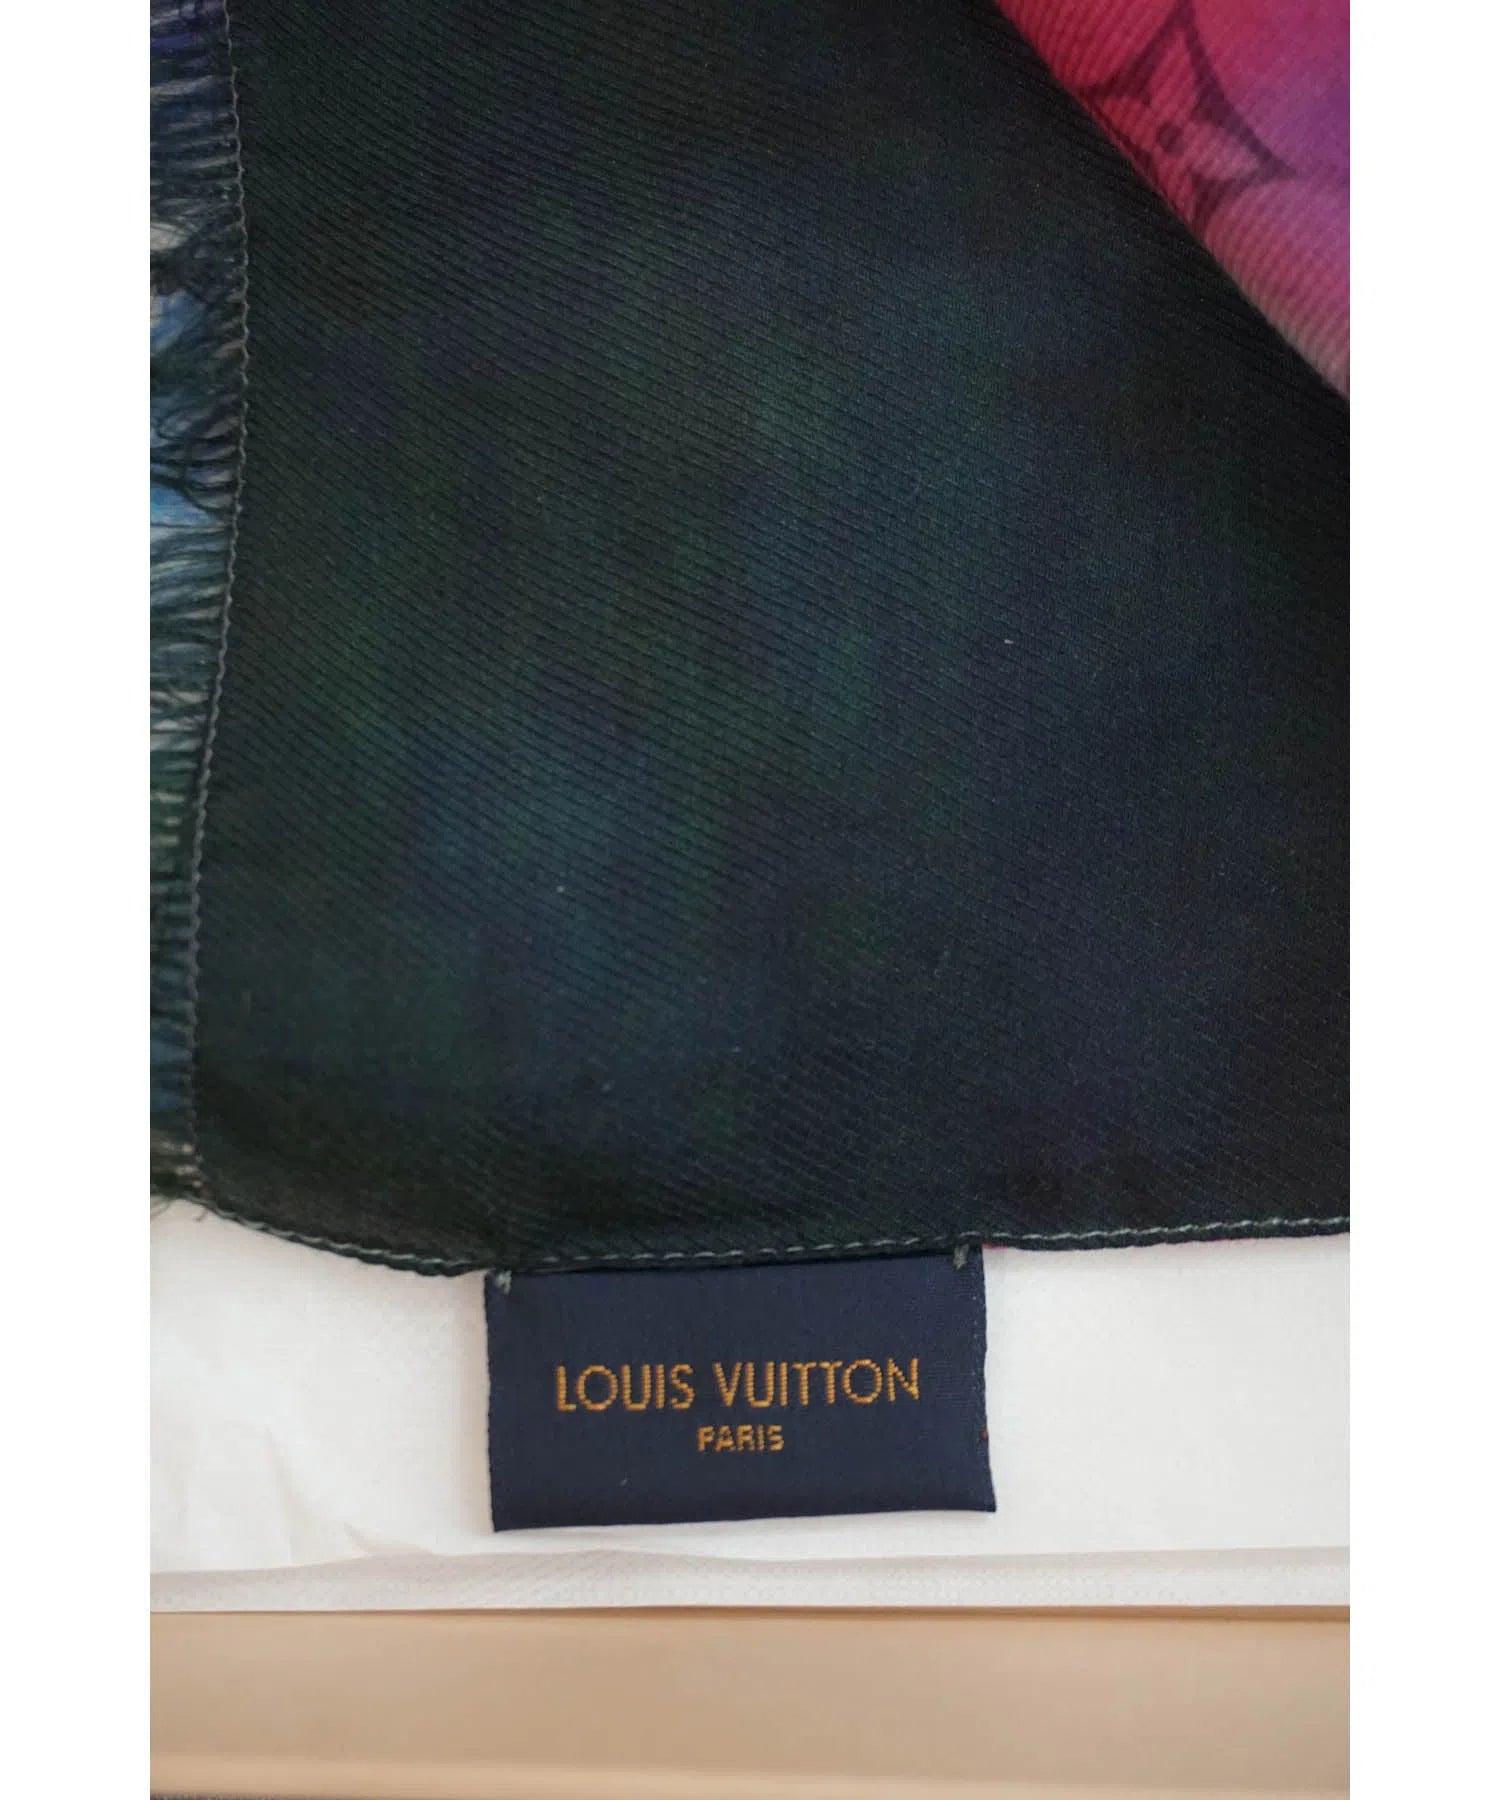 Louis Vuitton Graffiti Stole, Multi, One Size